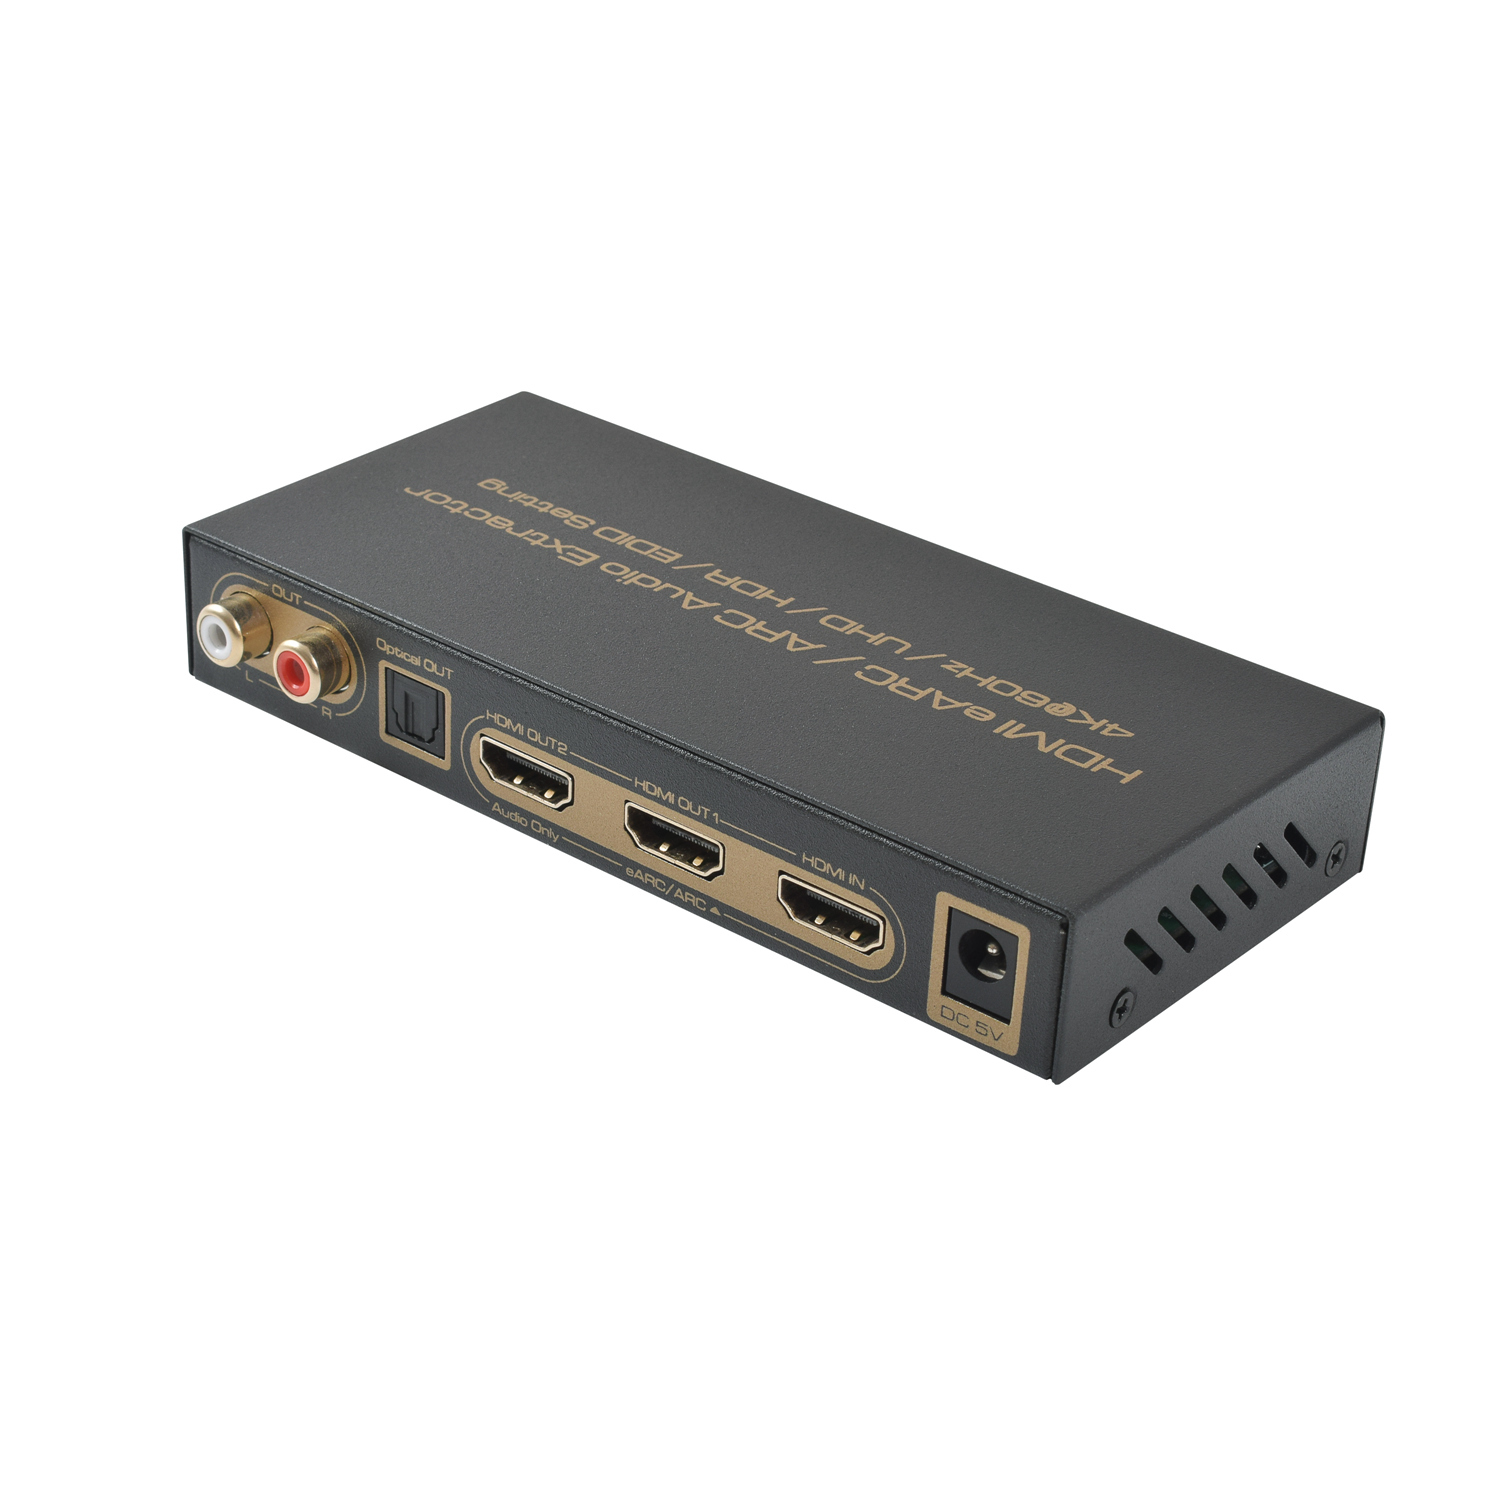 HDMI eARC / ARC Audio Extractor